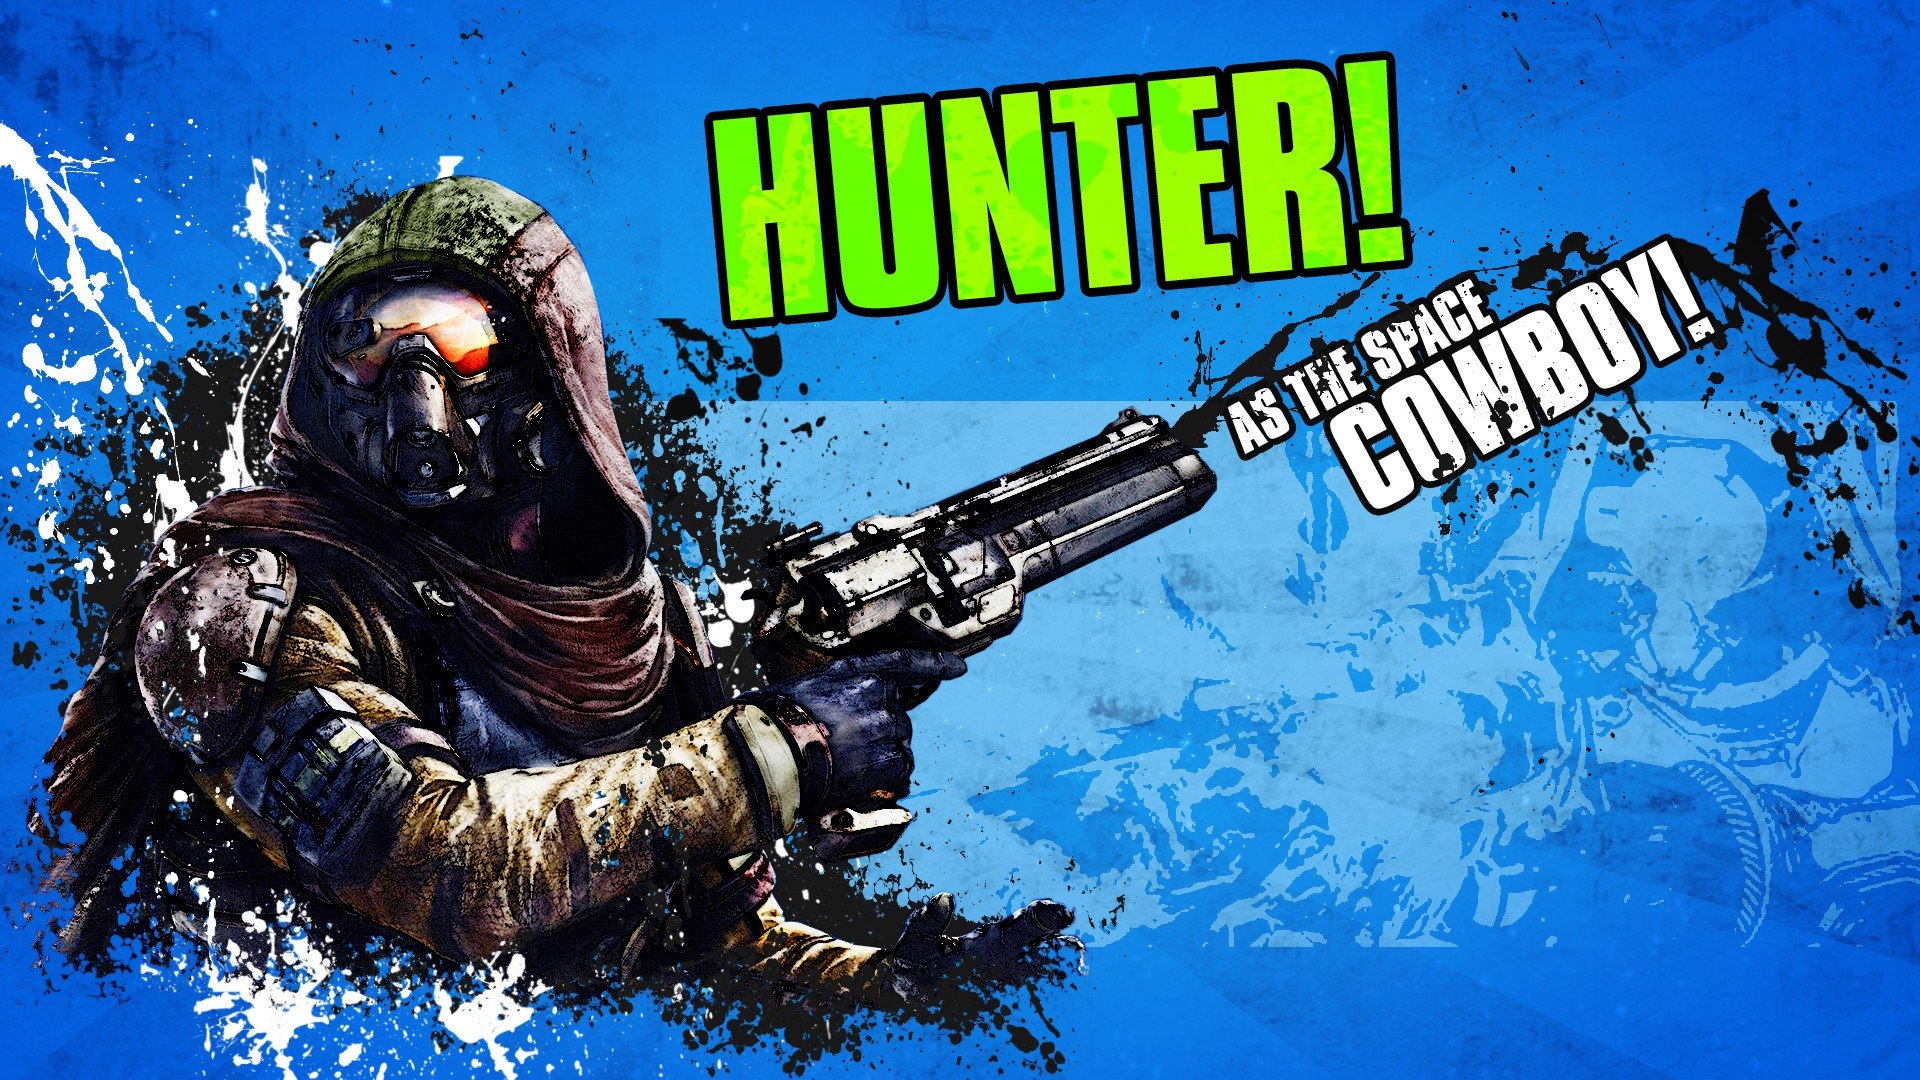 hunter, Destiny (video game), Video games Wallpaper